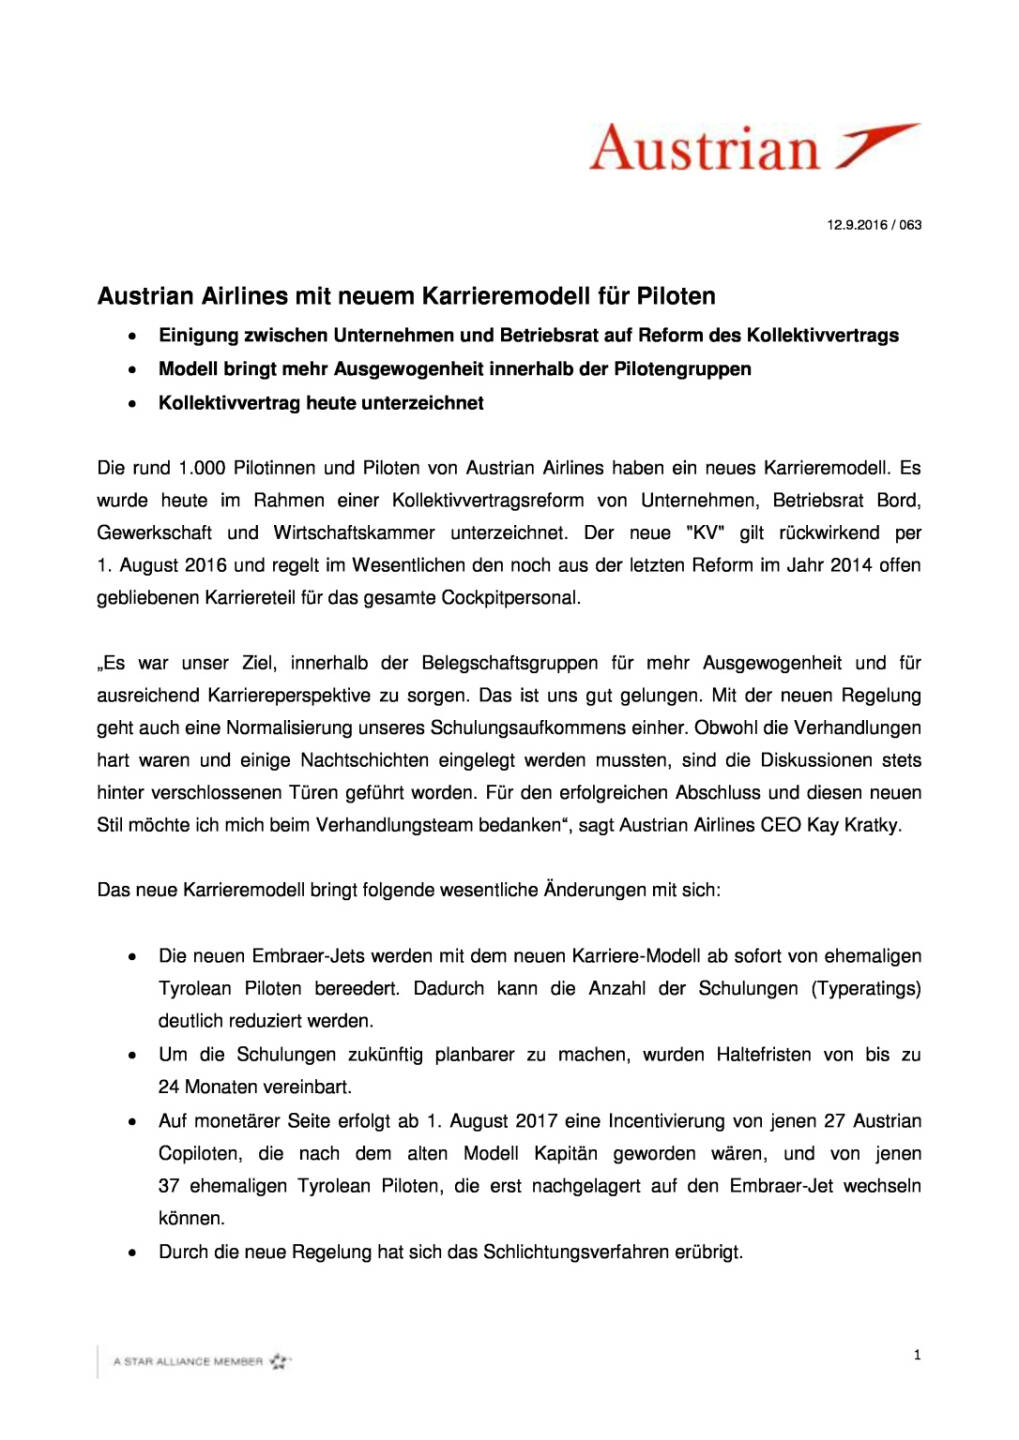 Austrian Airlines: Neues Karrieremodell für Piloten, Seite 1/2, komplettes Dokument unter http://boerse-social.com/static/uploads/file_1765_austrian_airlines_neues_karrieremodell_fur_piloten.pdf